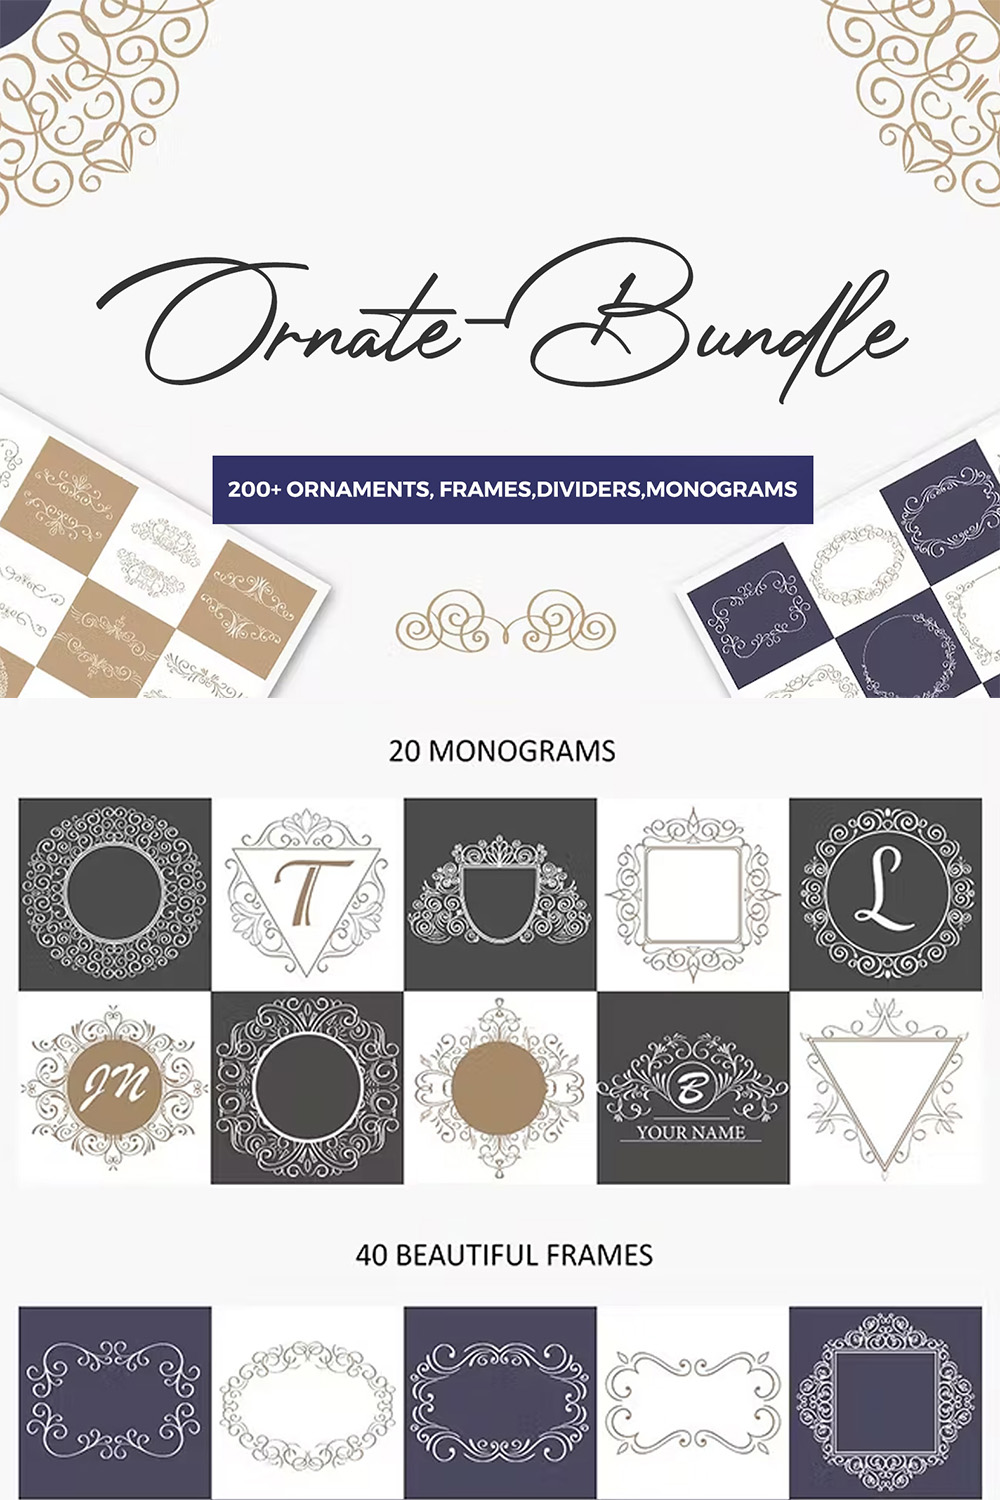 Ornate Branding and Logos Bundle pinterest image.